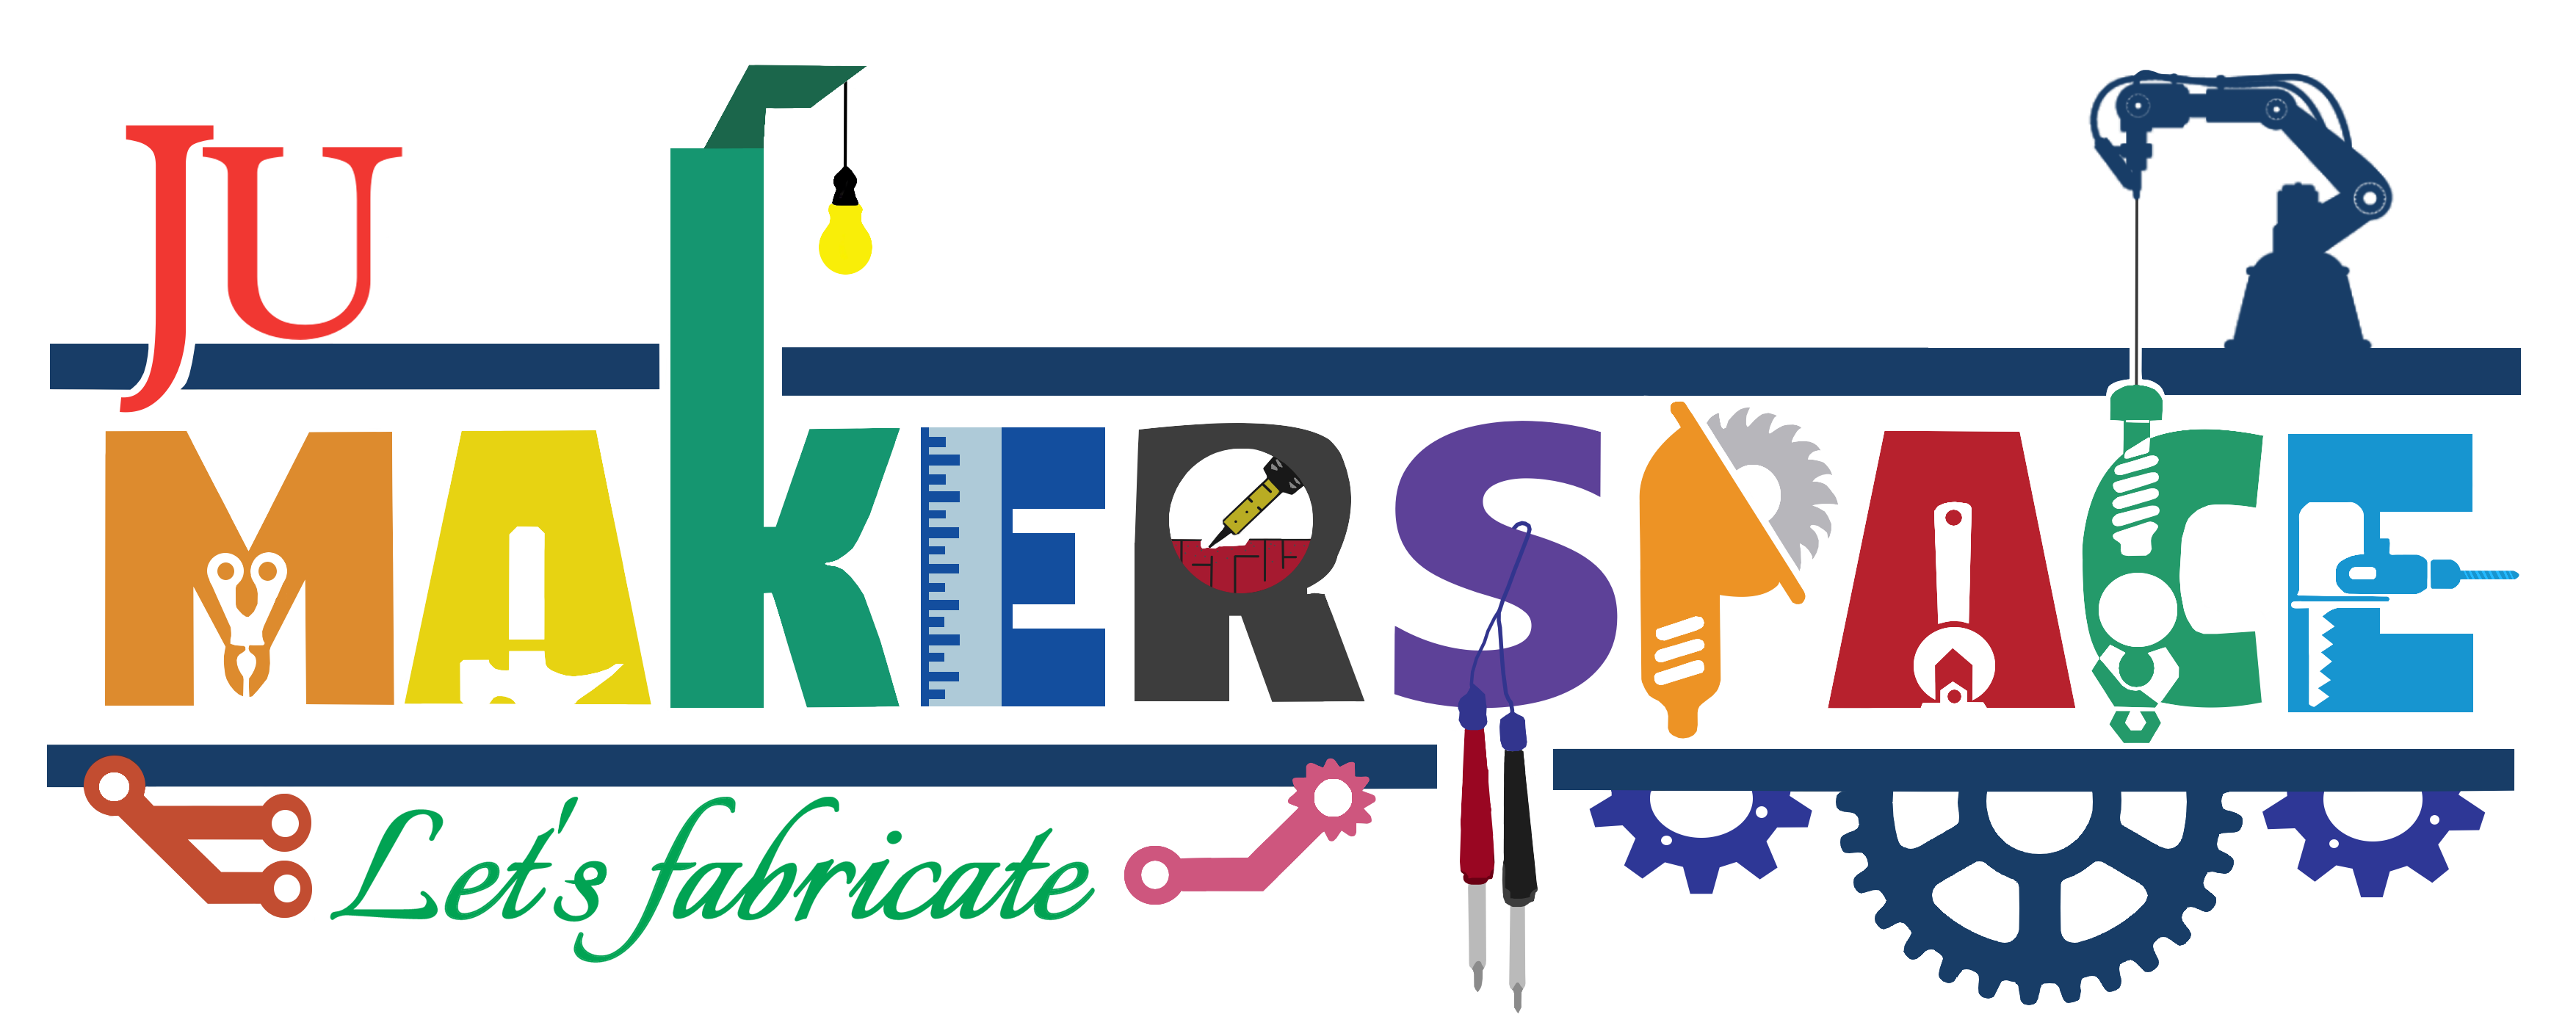 mks logo